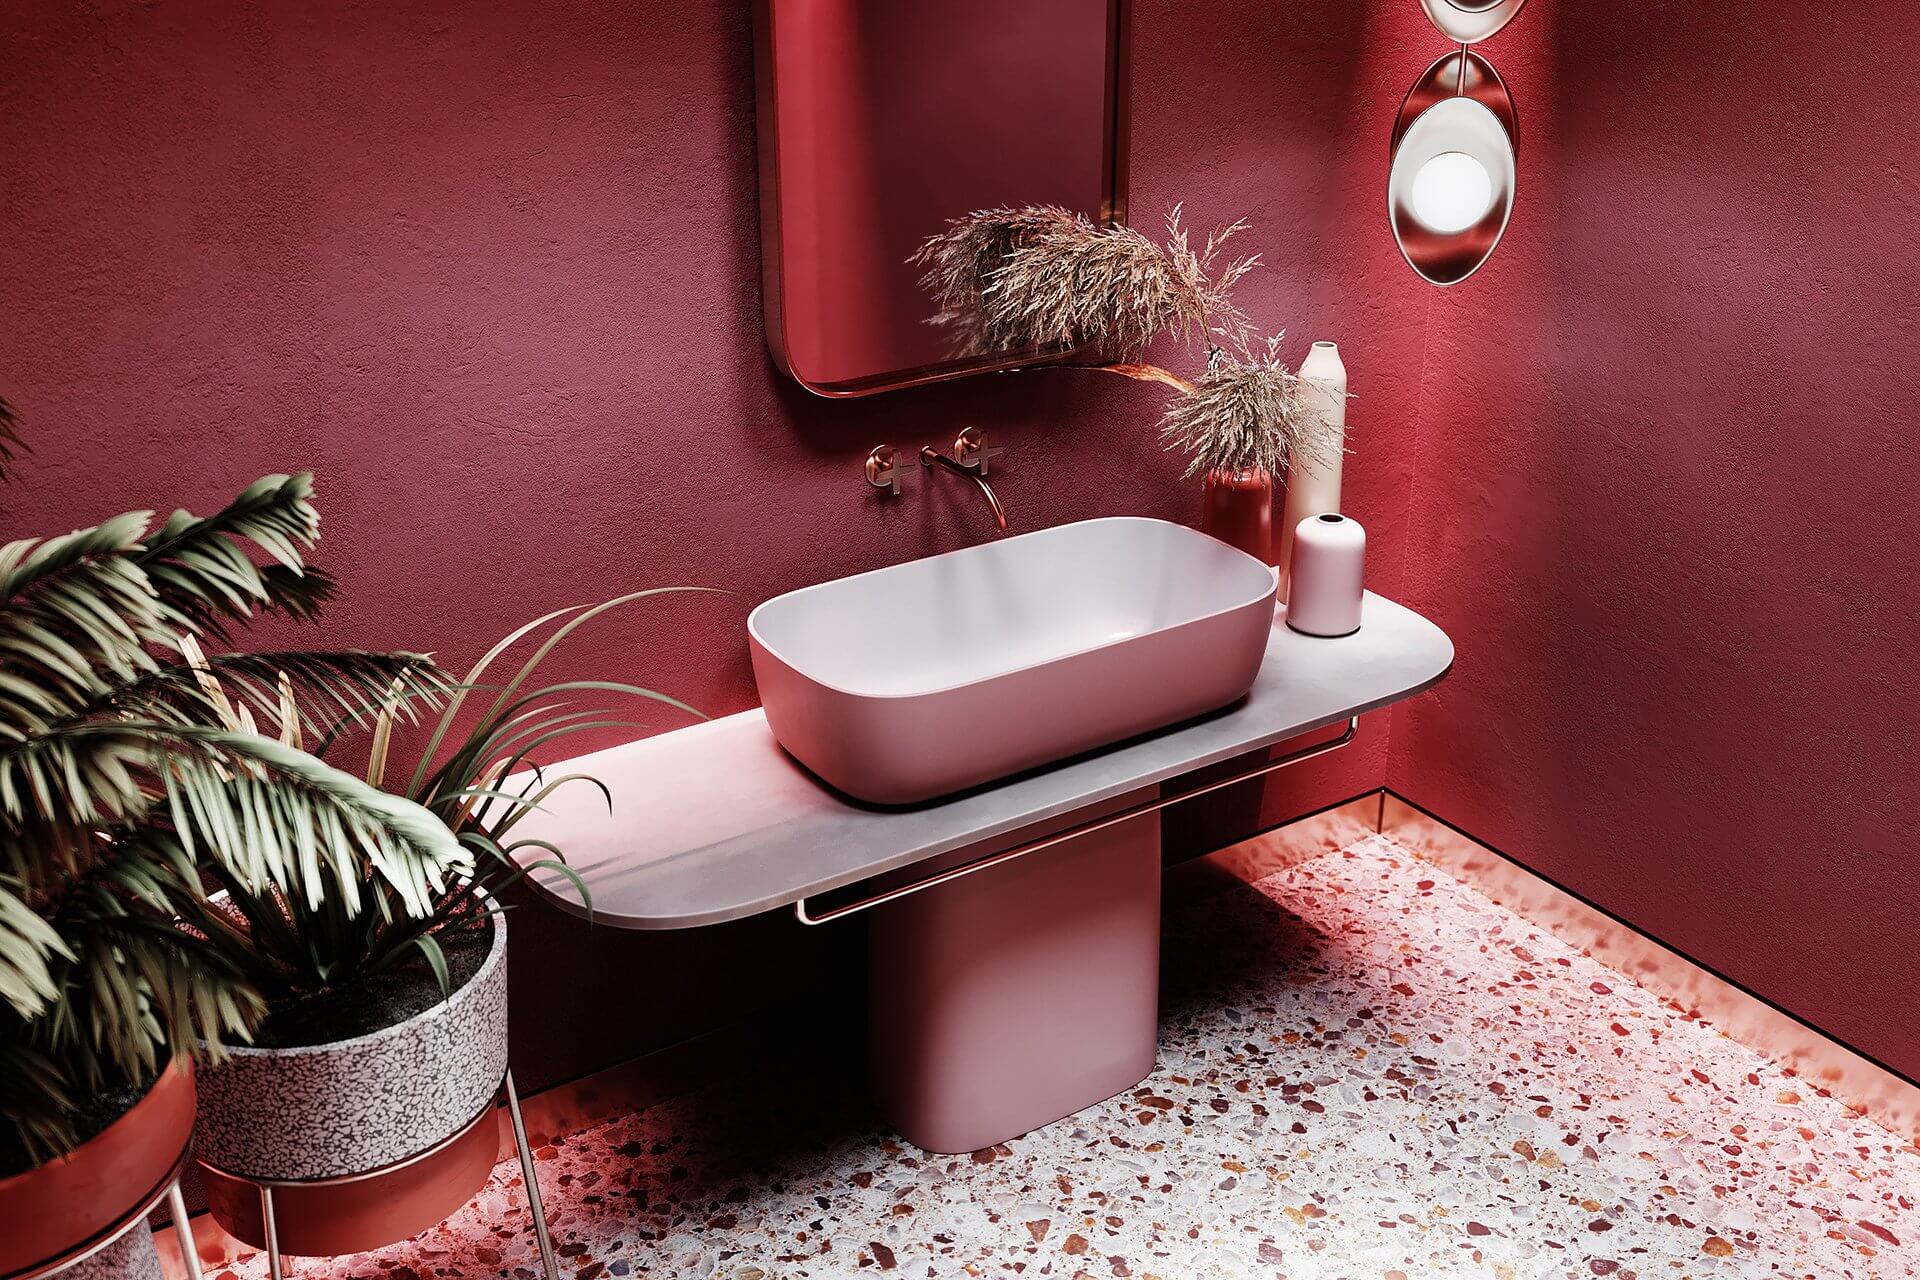 Bathroom design mitte wash basin led red 3 - cgi visualization